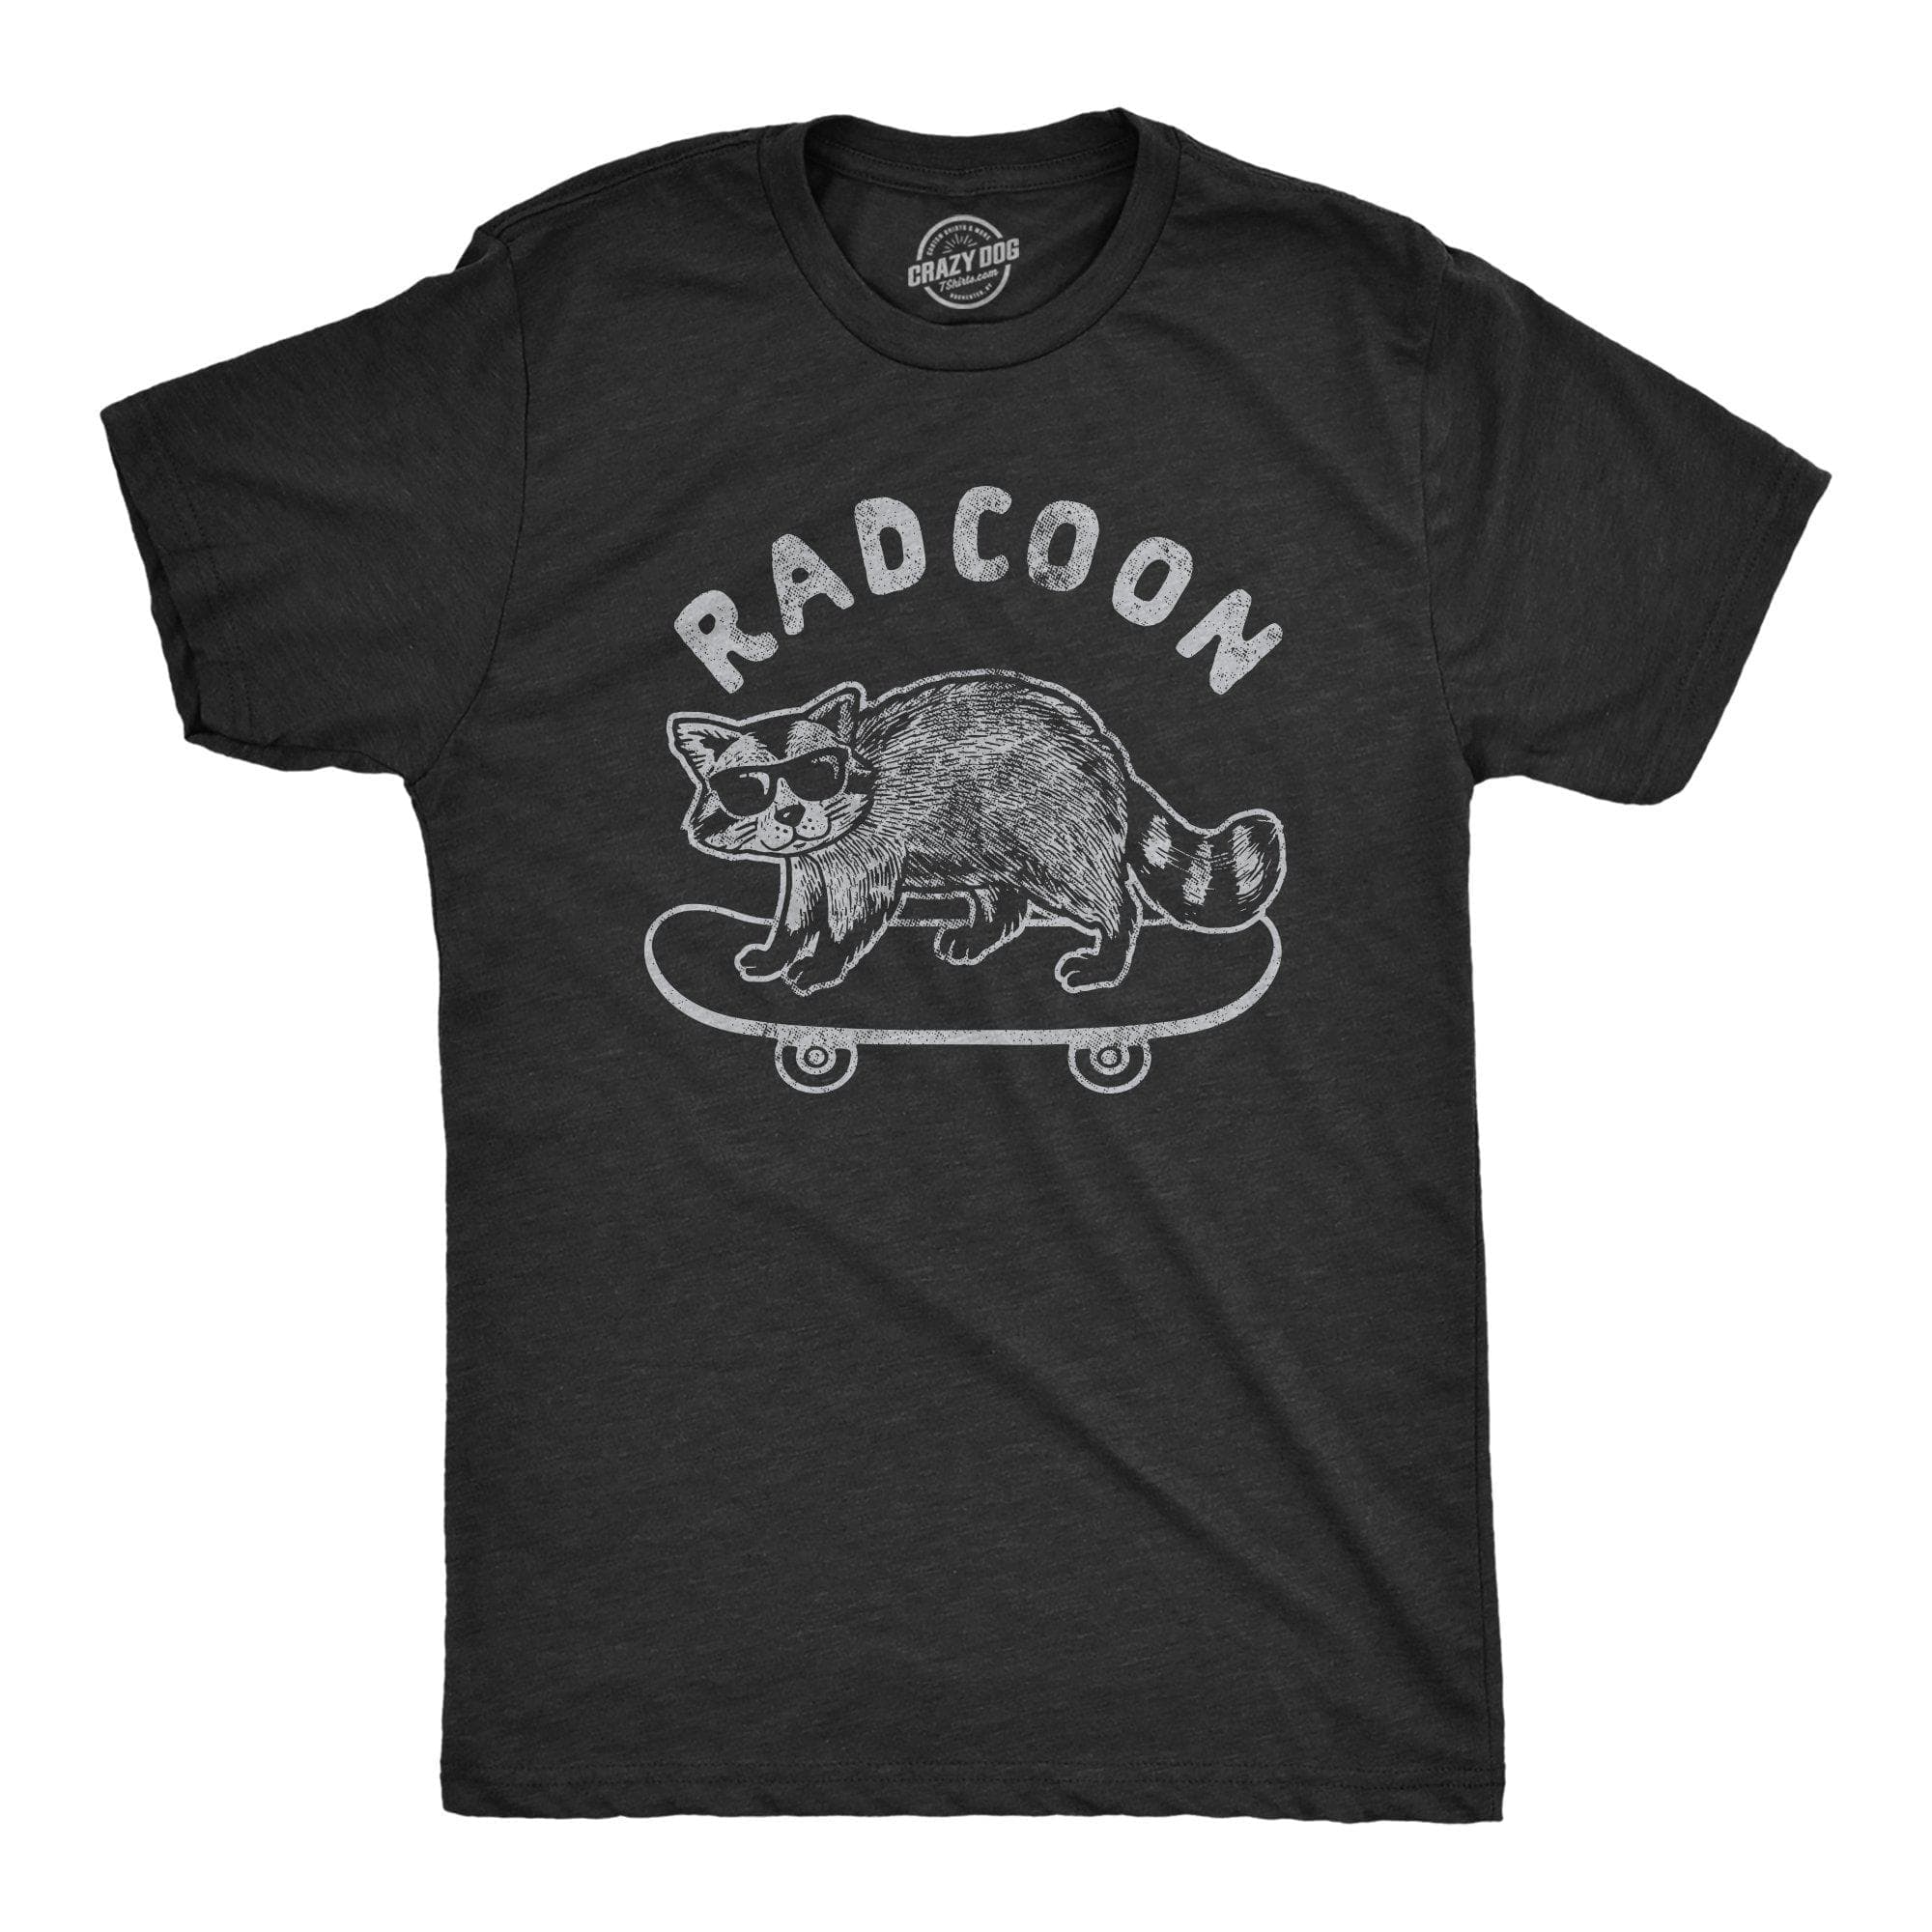 Radcoon Men's Tshirt - Crazy Dog T-Shirts